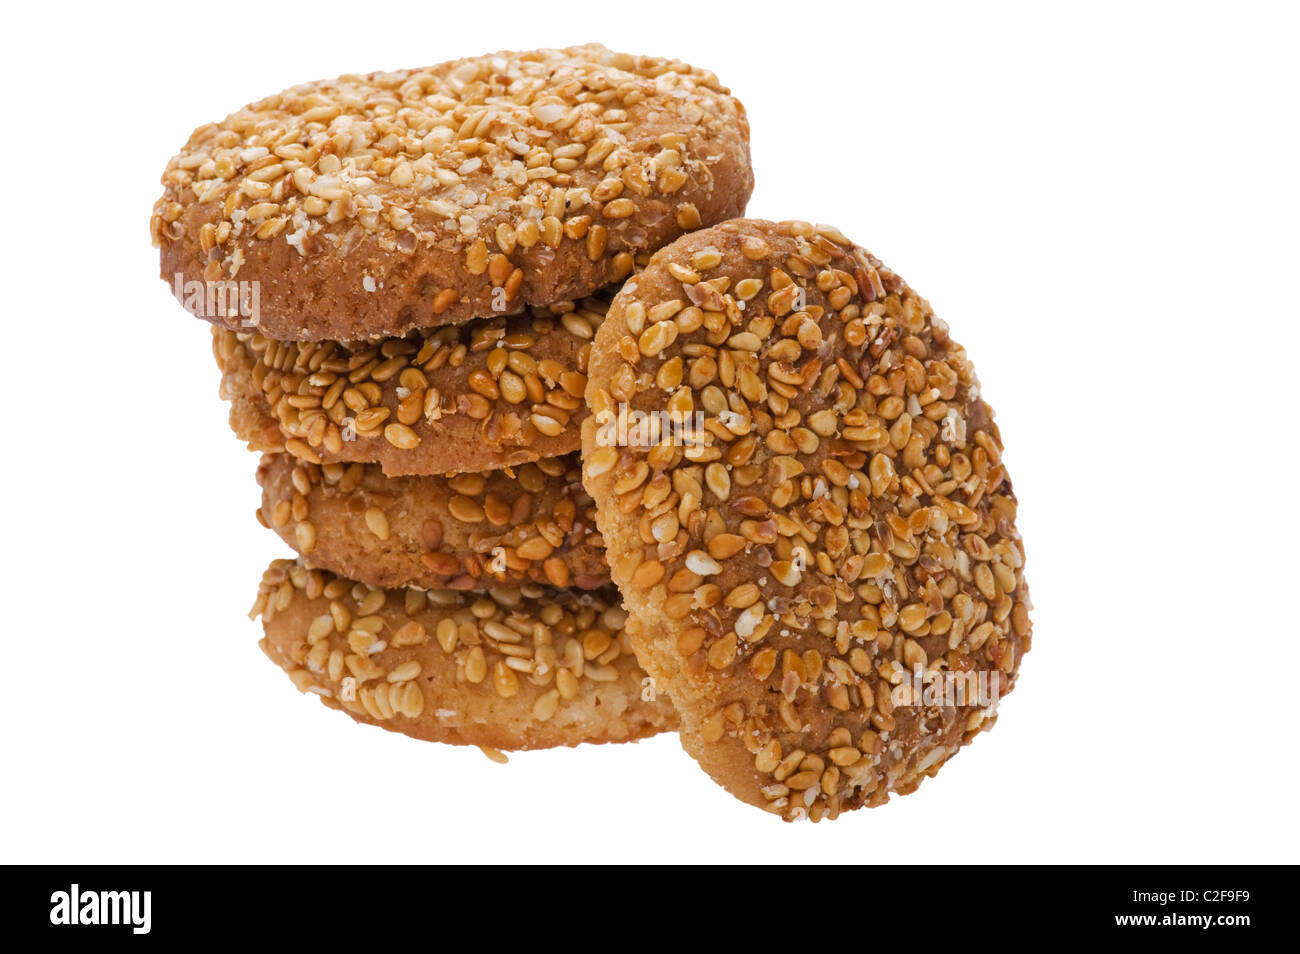 Objekt auf weiß - Cookies mit Sesam Stockfoto